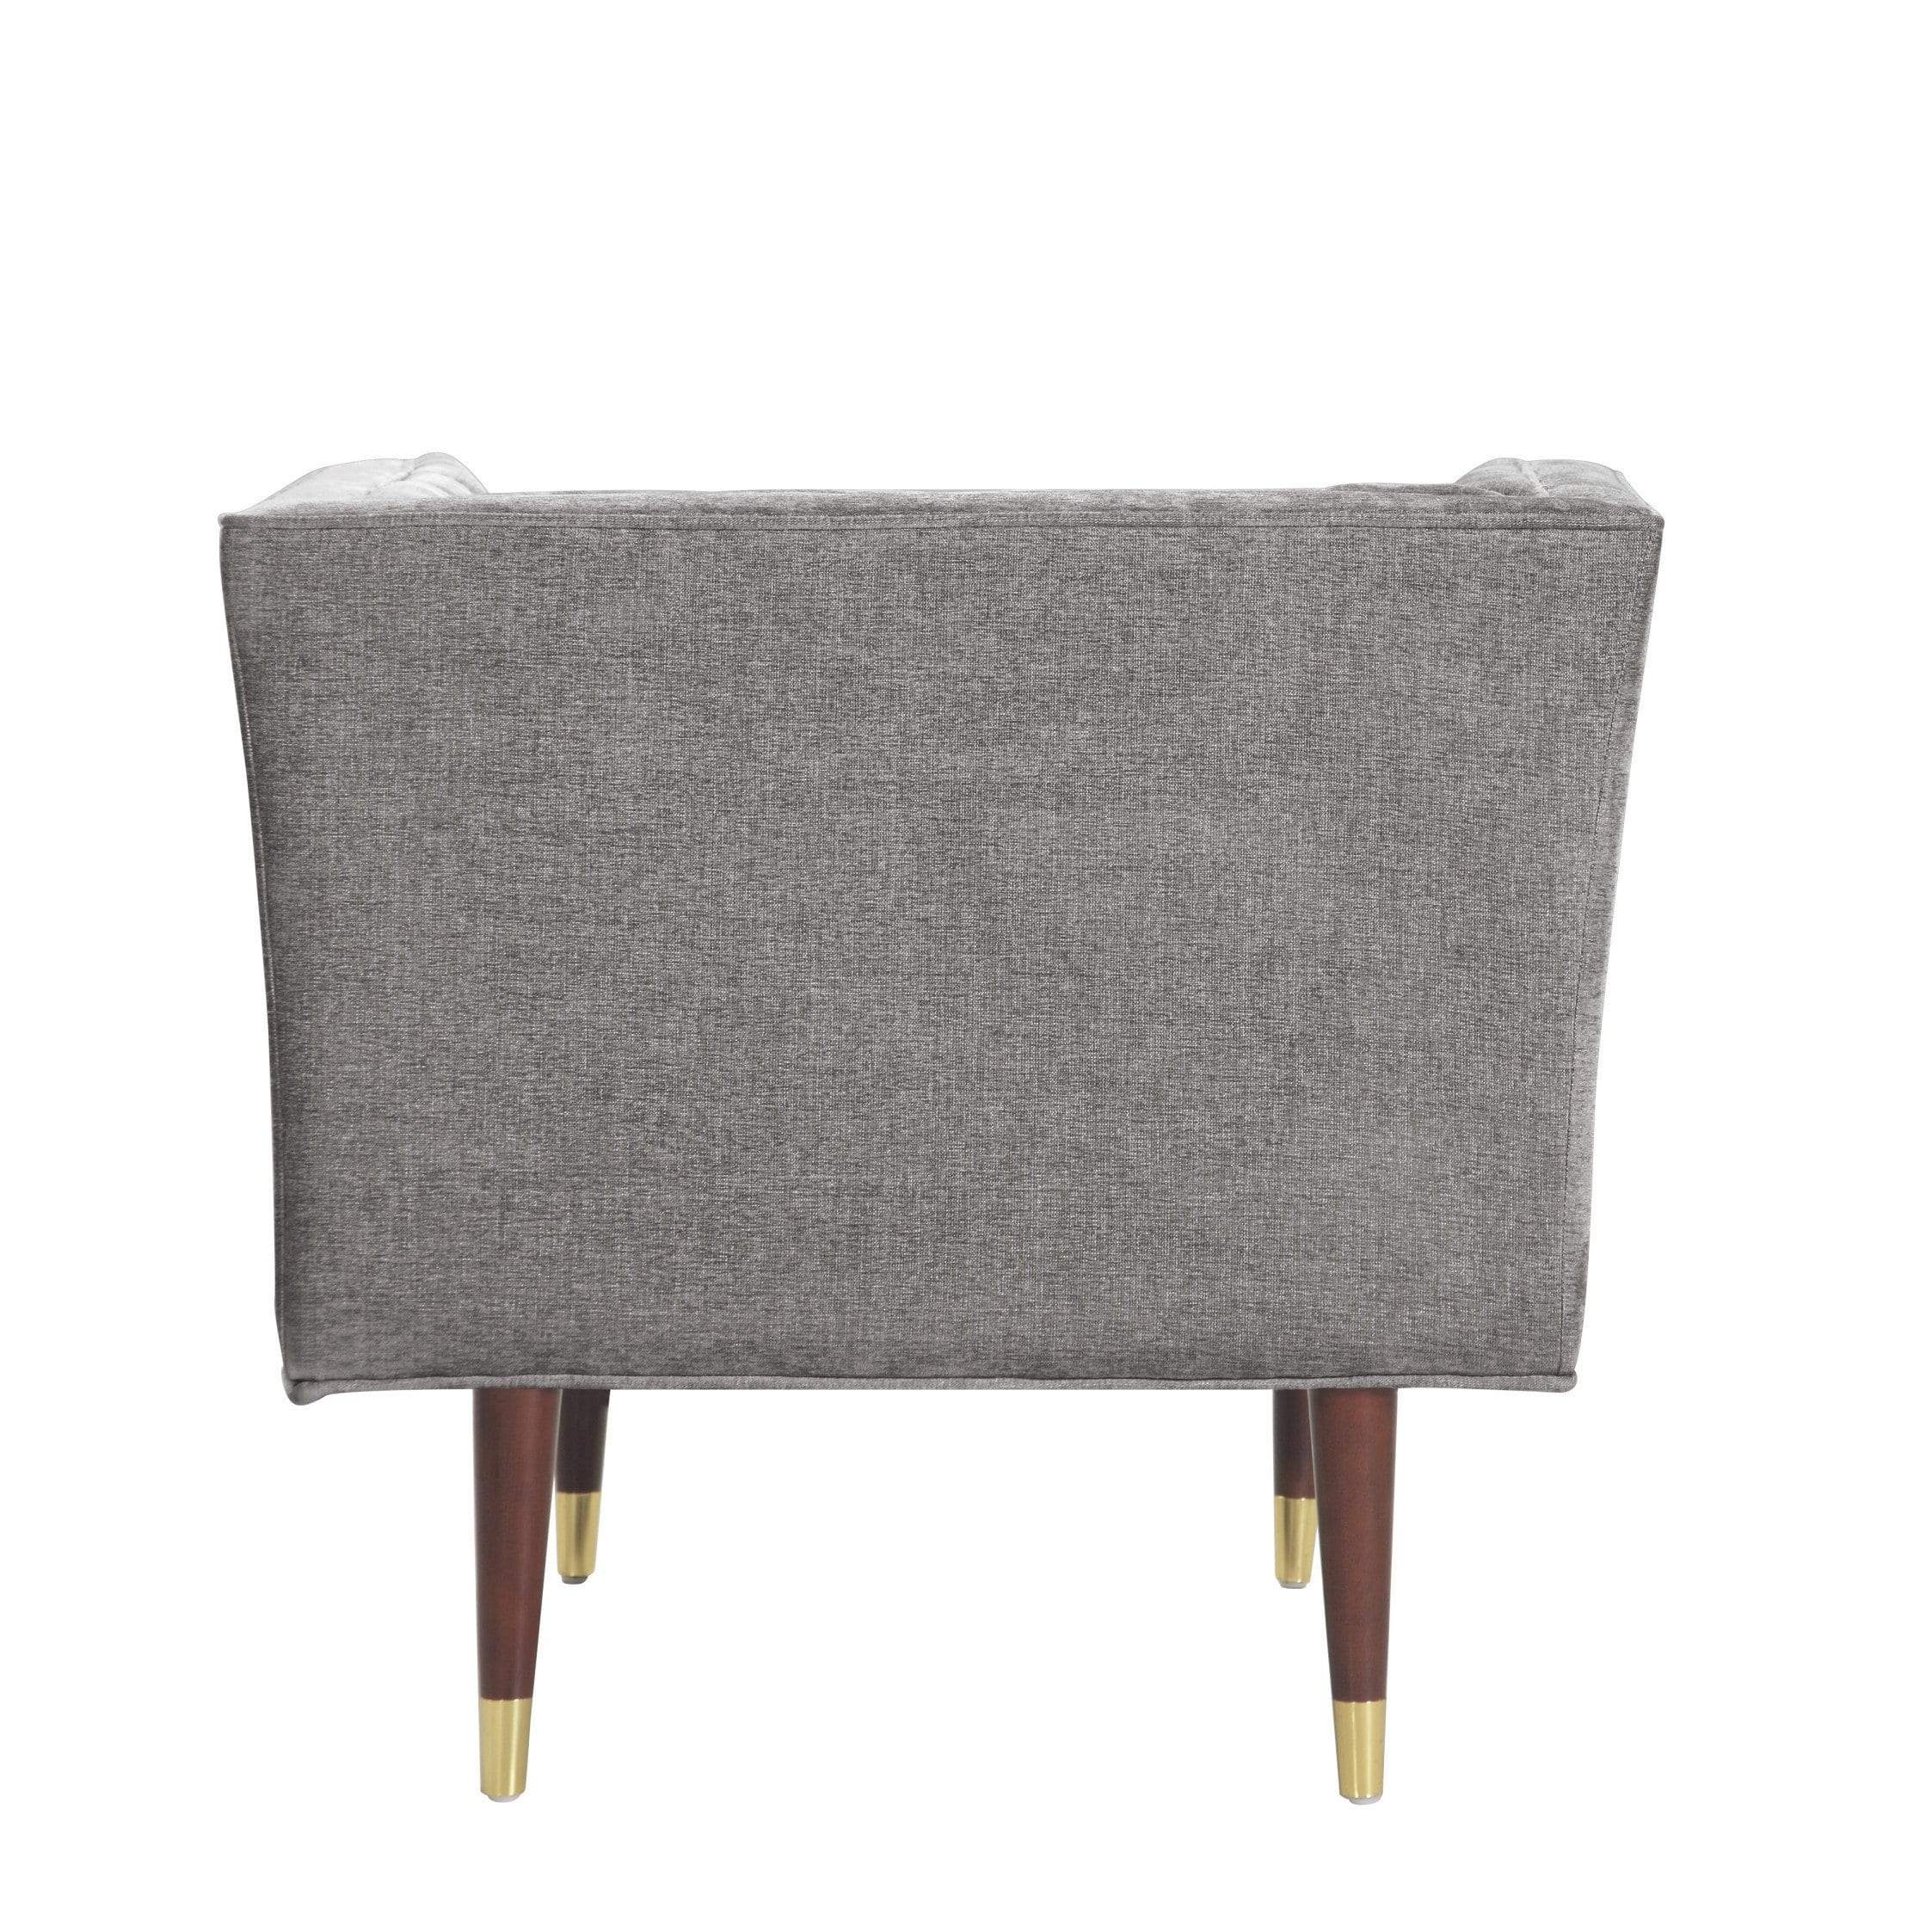 Alma Clam Shell Linen Textured Accent Club Chair